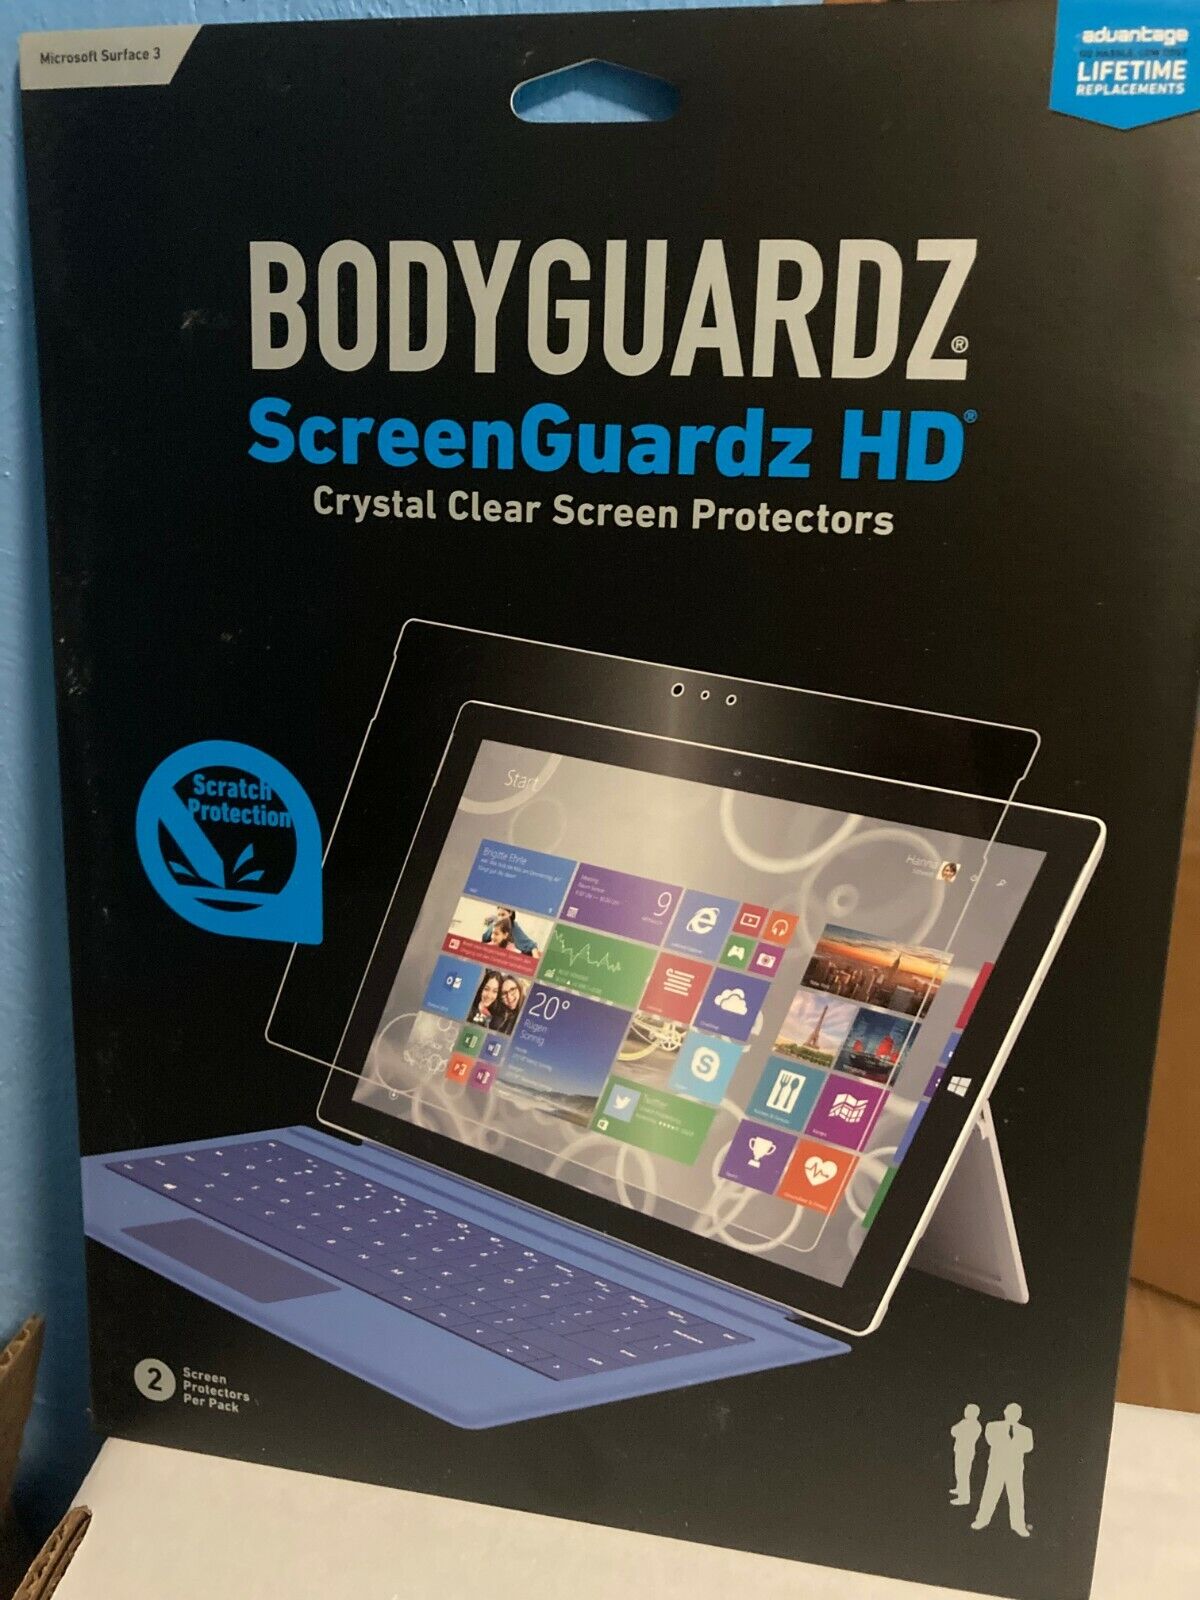 BodyGuardz Screen Guardz HD Crystal Clear Screen Protector Microsoft Surface 3 